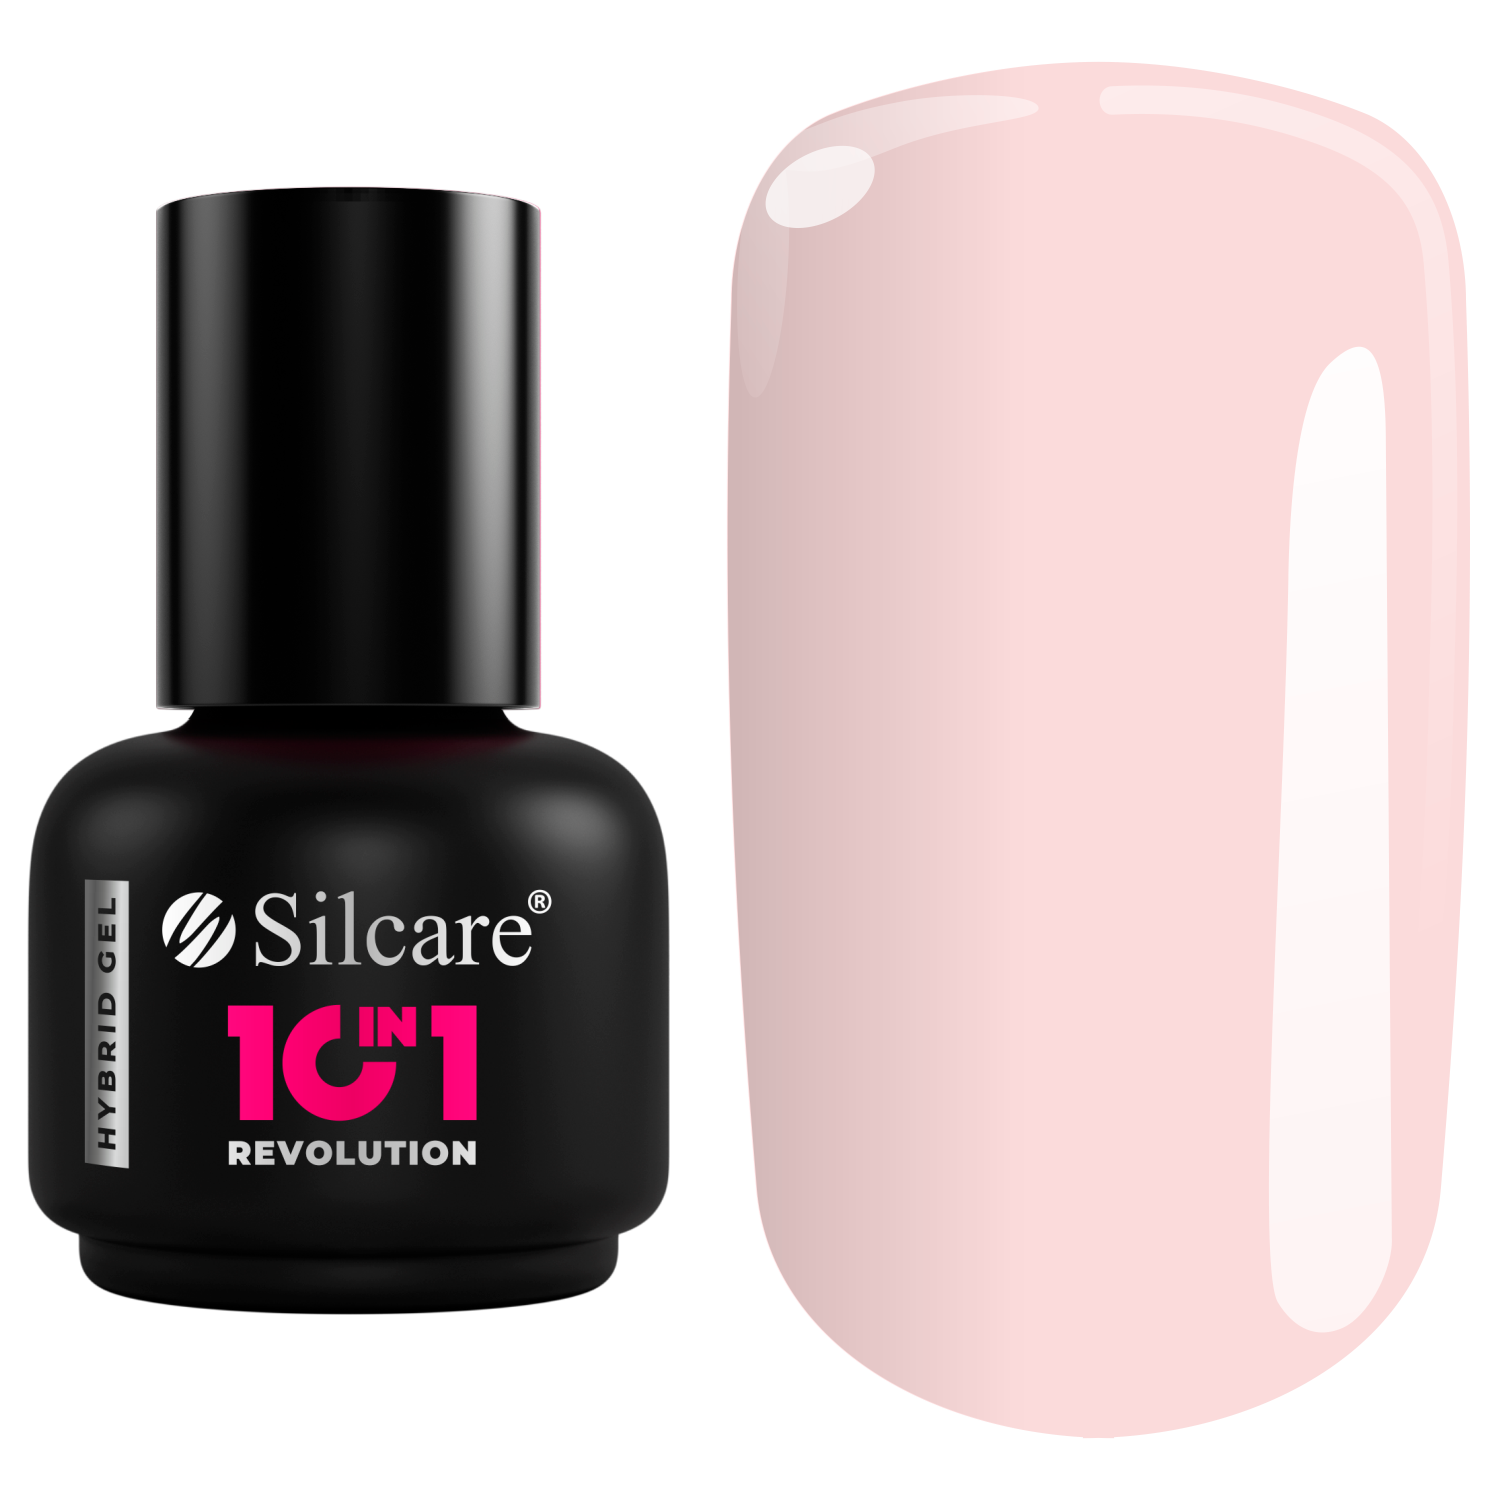 цена Светло-розовый гибридный лак для ногтей Silcare 10In1, 15 мл